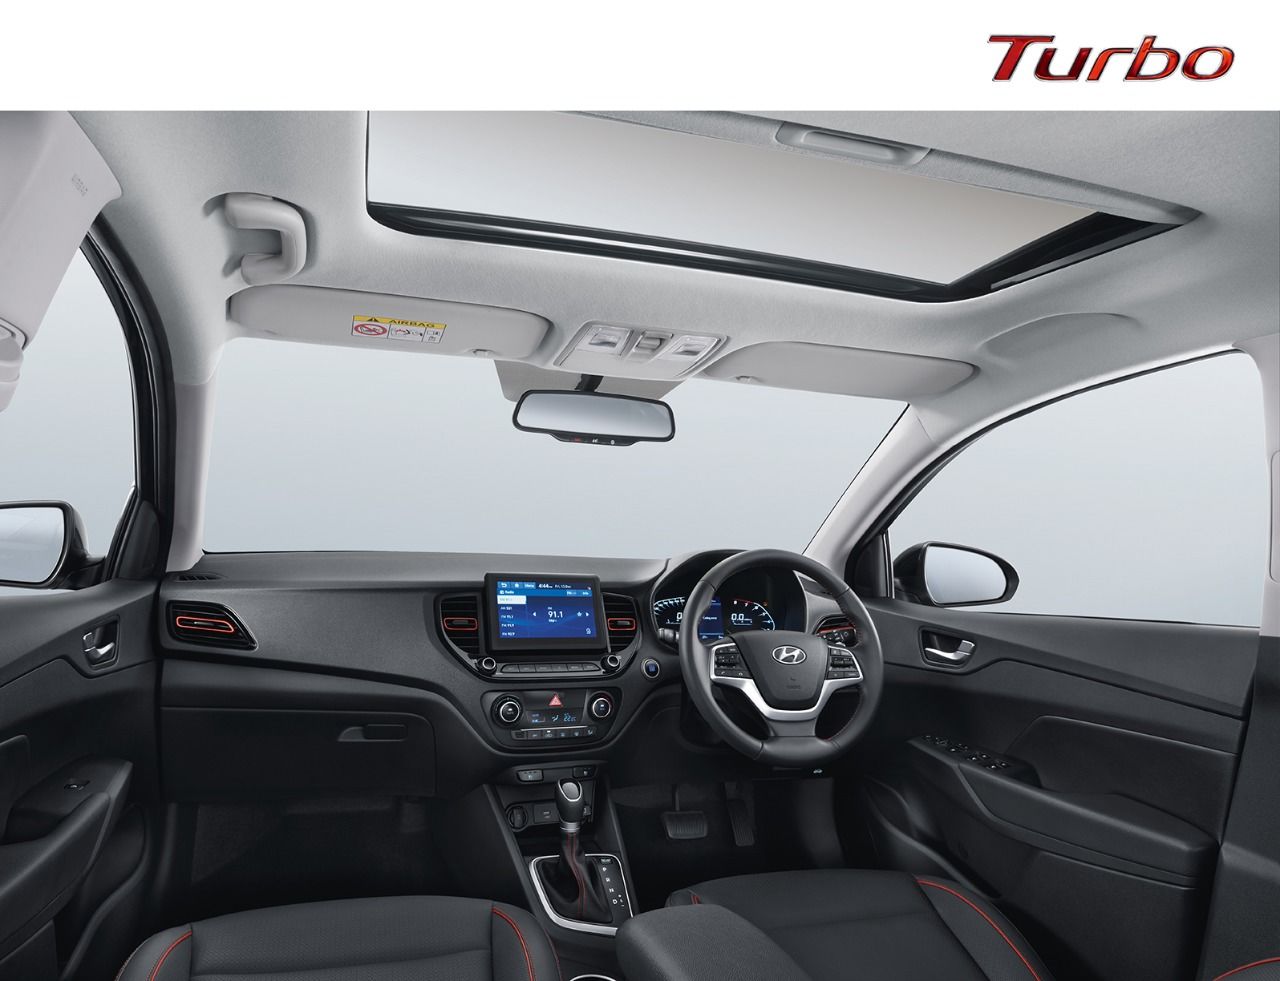 The interiors of the turbo variant of 2020 Hyundai Verna.